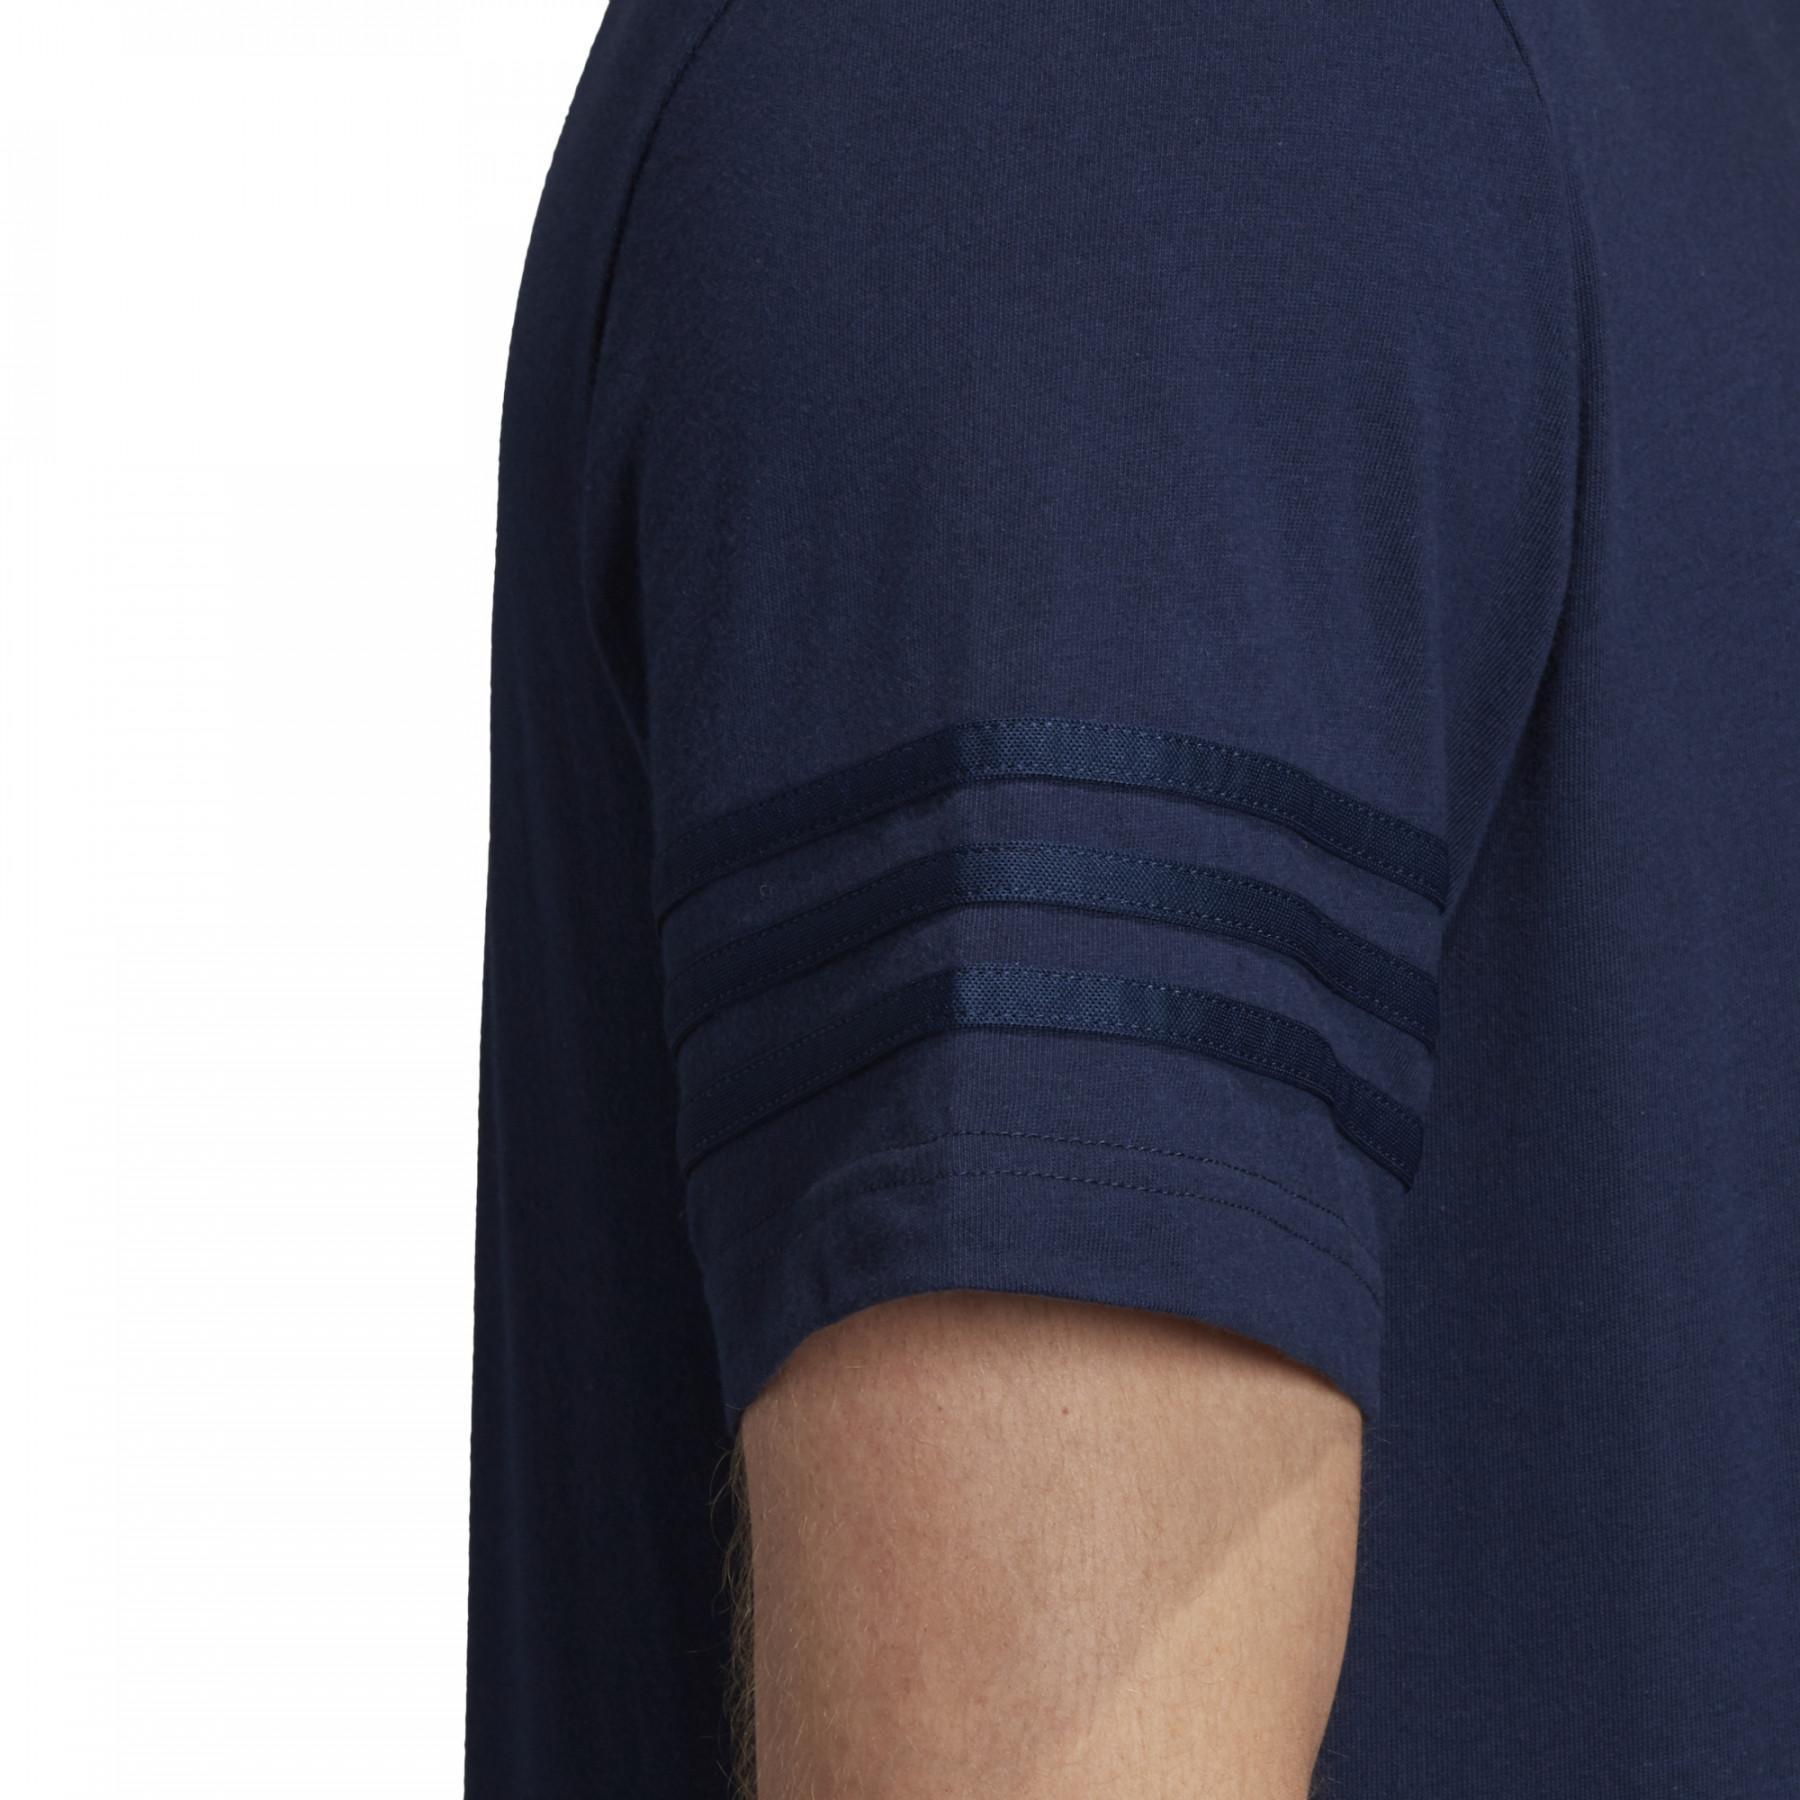 Koszulka adidas originals Outline Trefoil